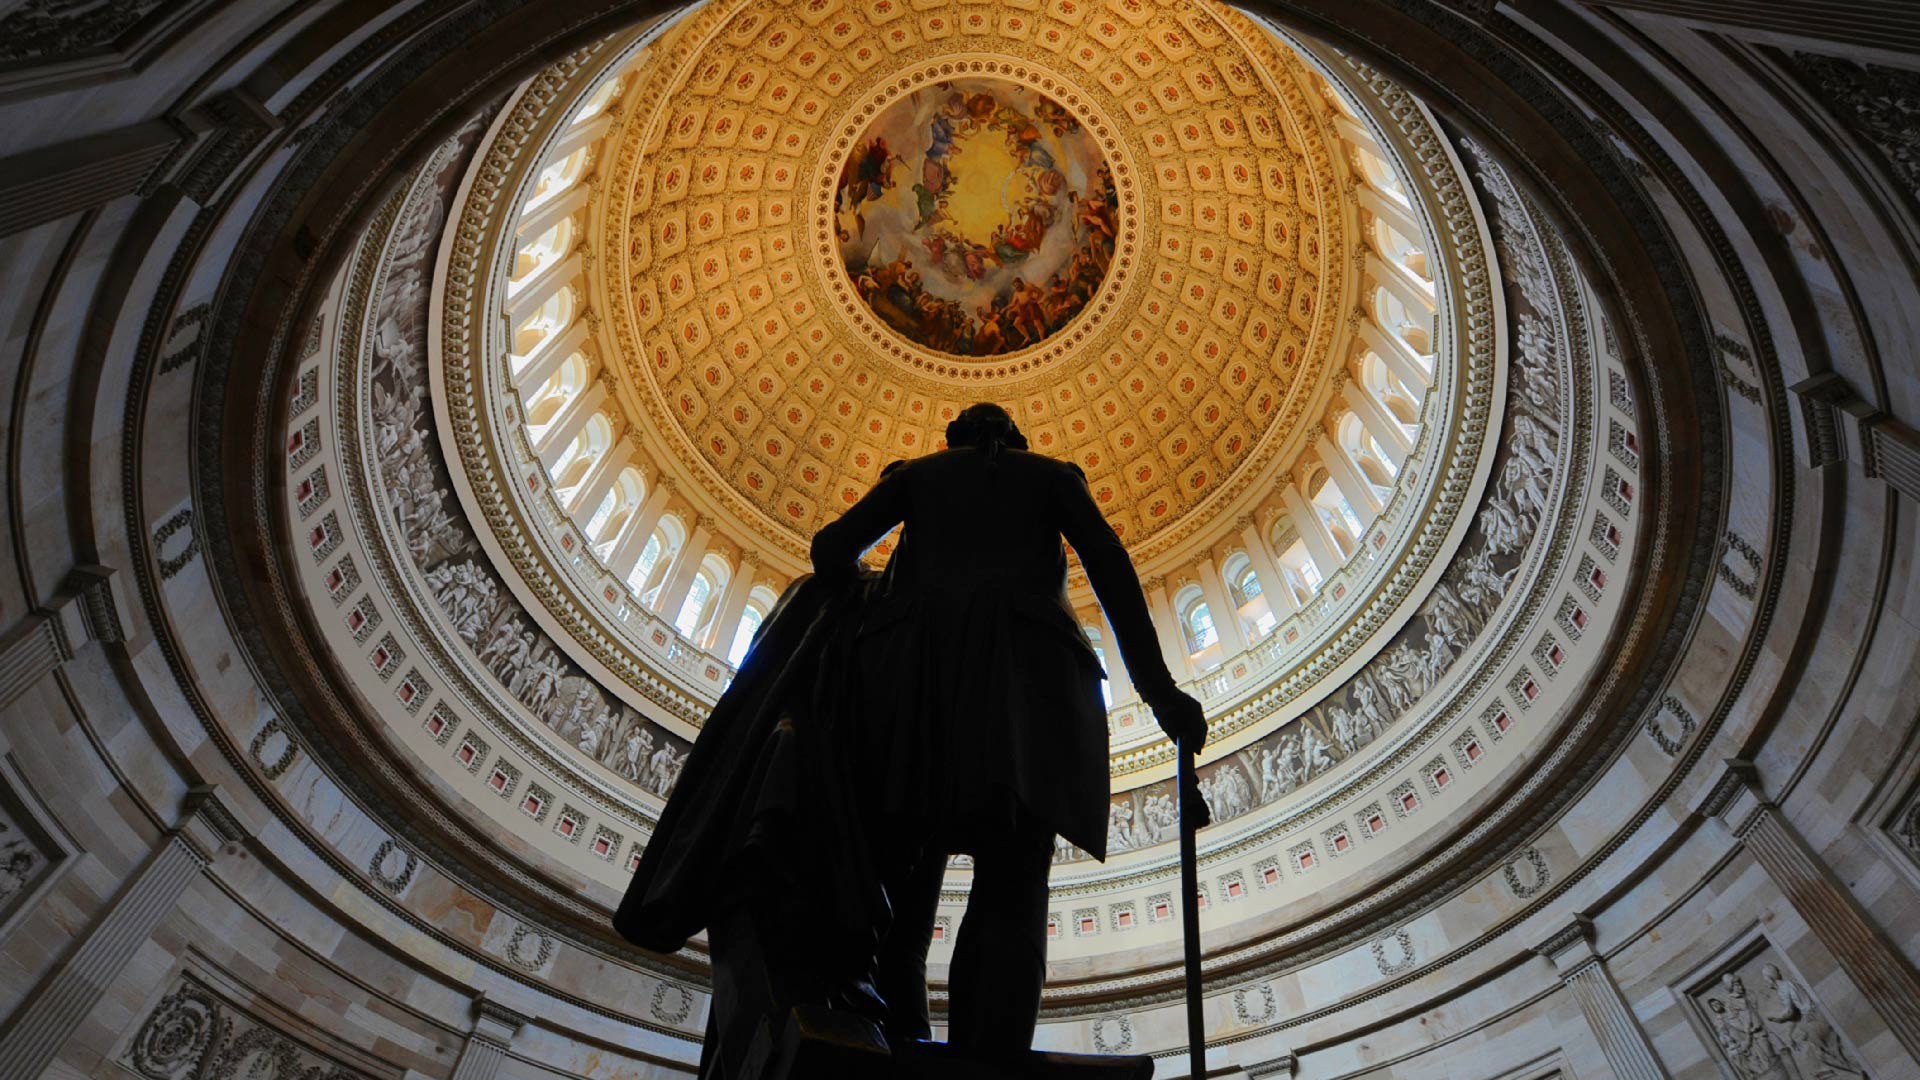 General 1920x1080 architecture sculpture statue men George Washington dome Washington, D.C. USA artwork painting history presidents